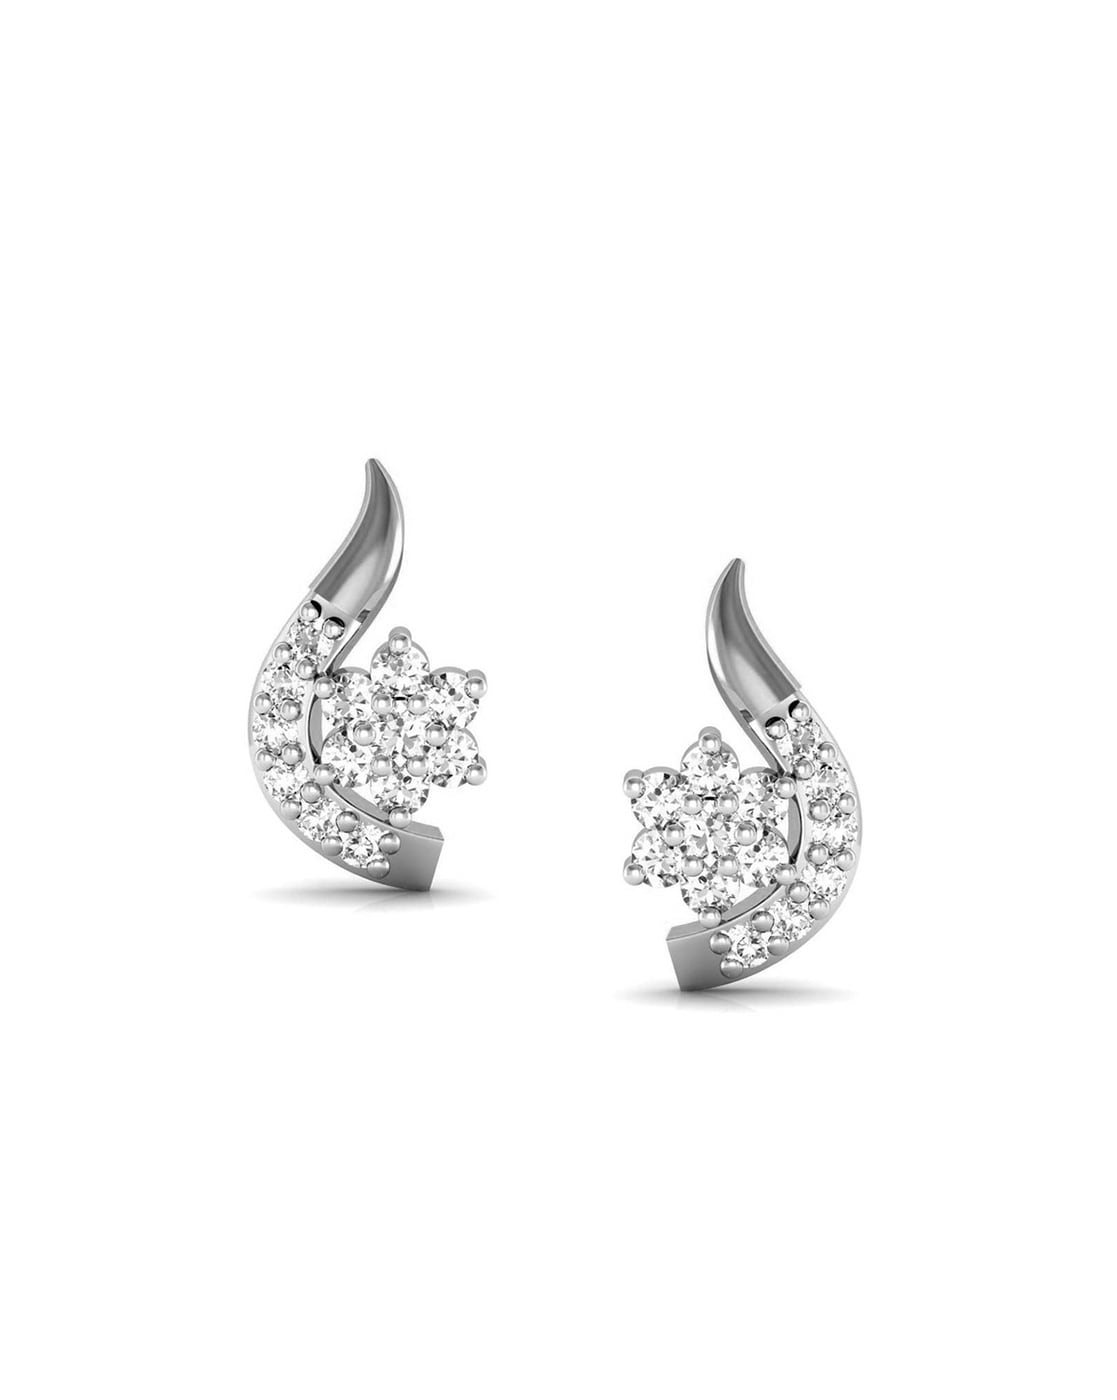 Surreal Dainty Diamond Stud Earrings in White Gold